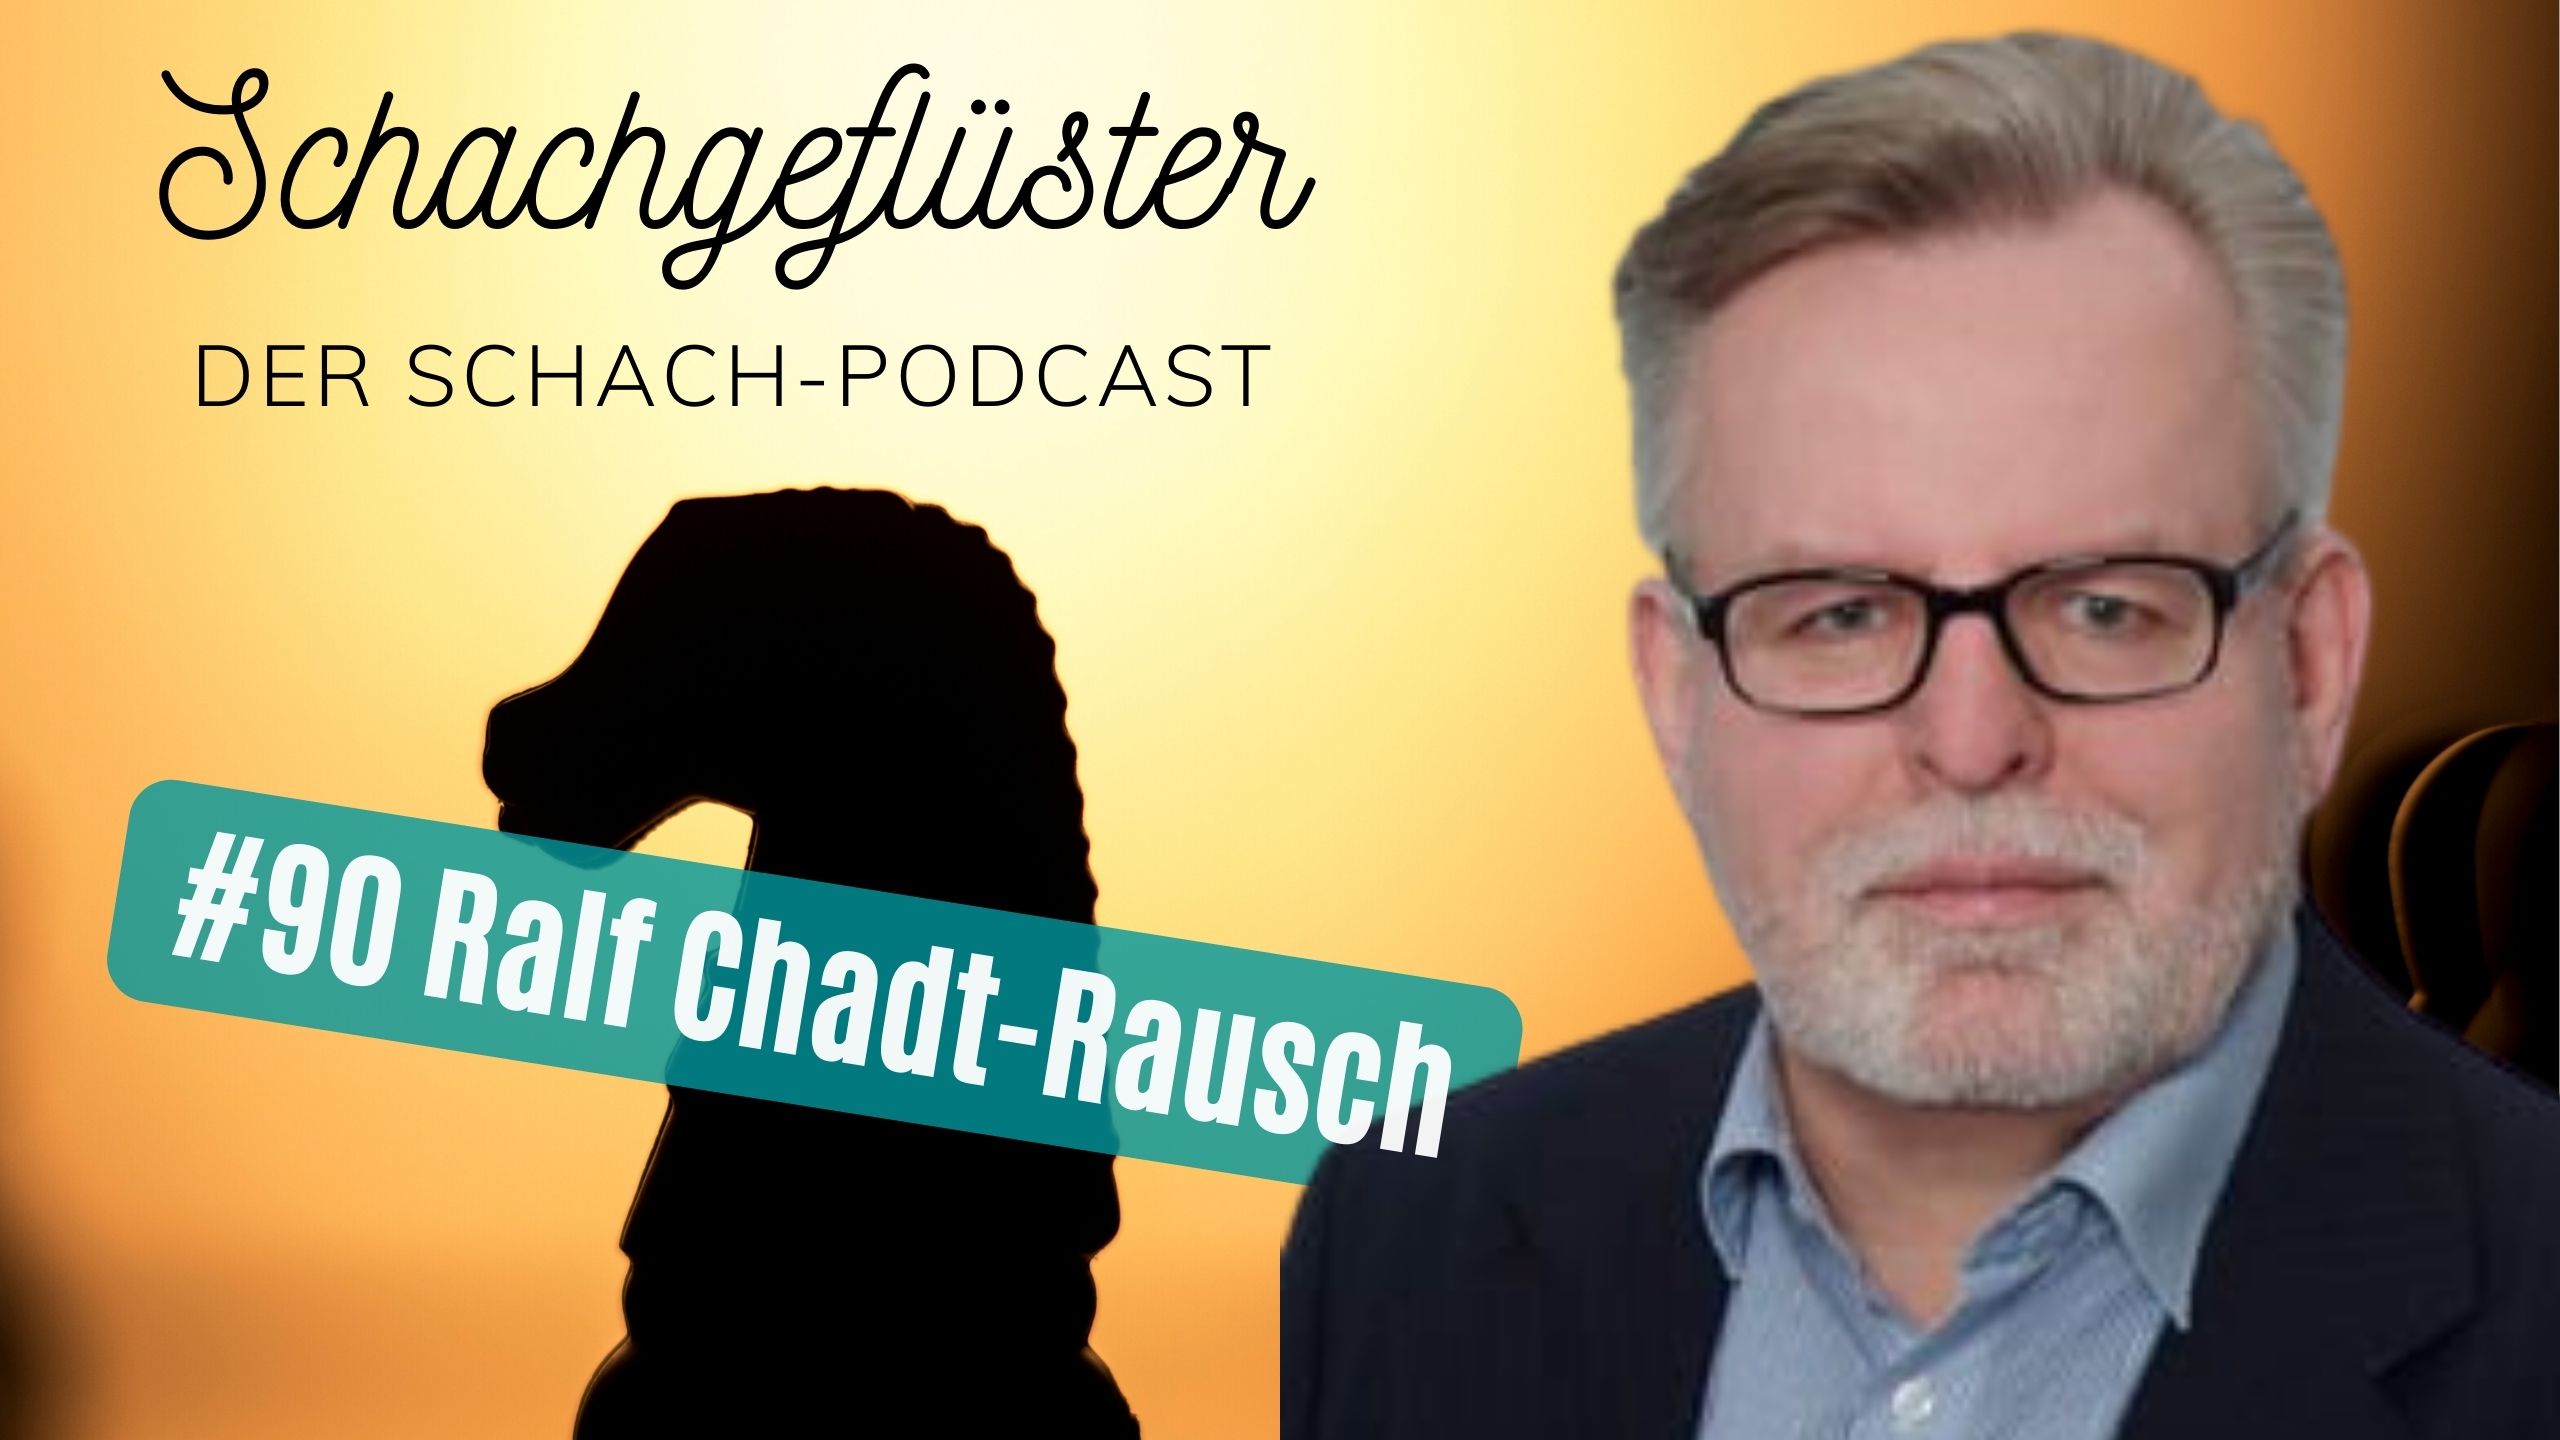 Ralf Chadt-Rausch